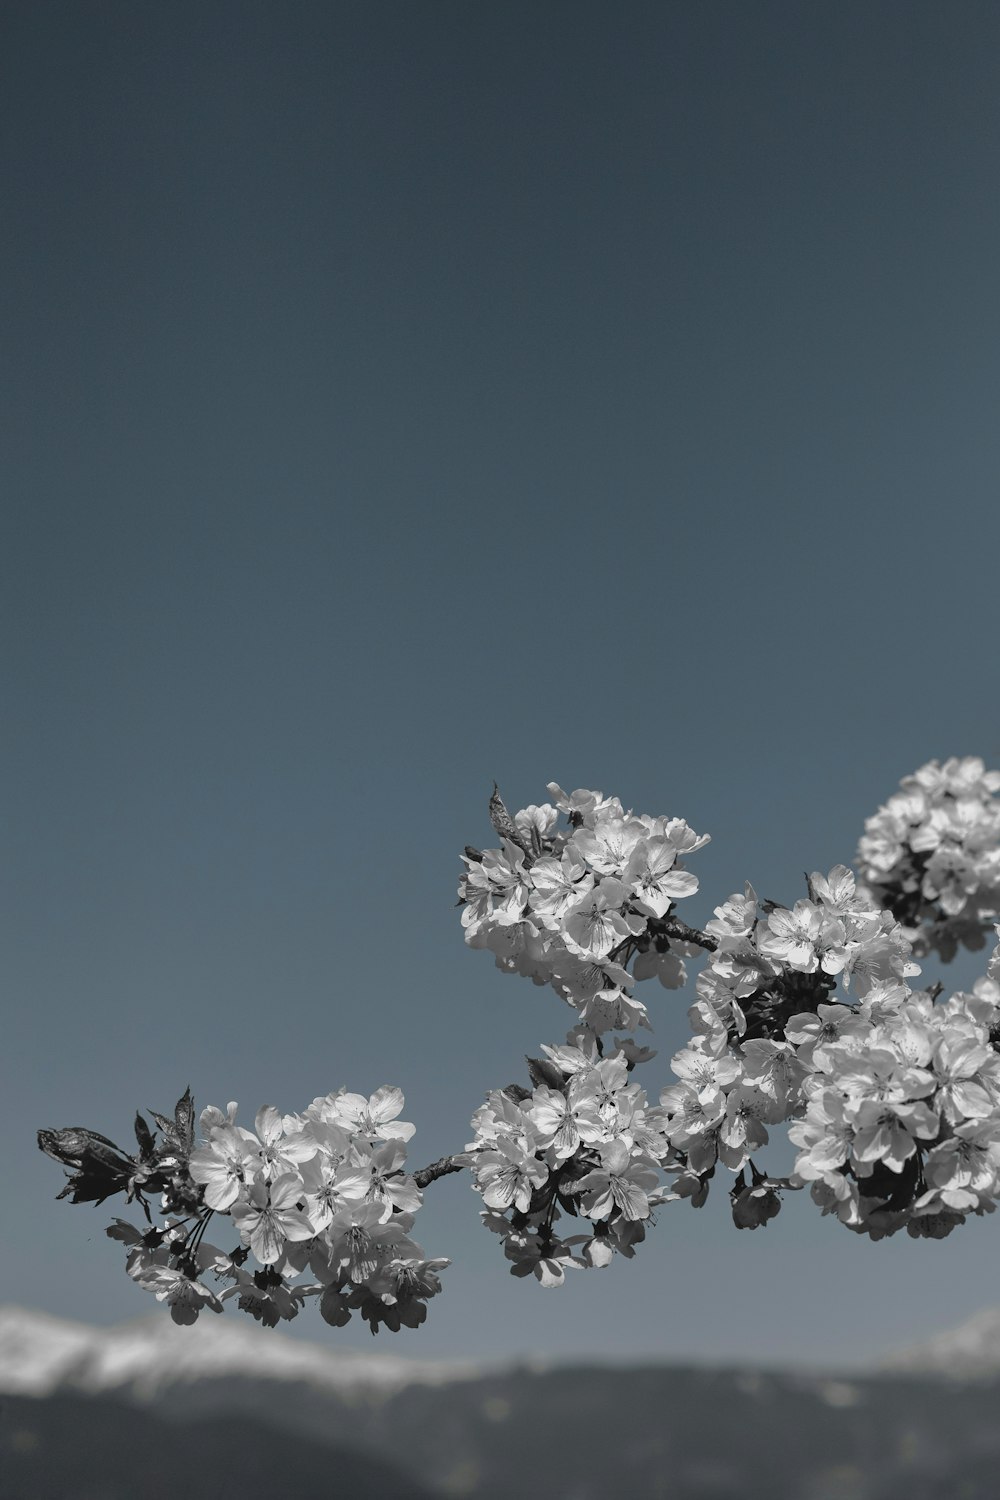 fotografia em tons de cinza da flor de pétalas